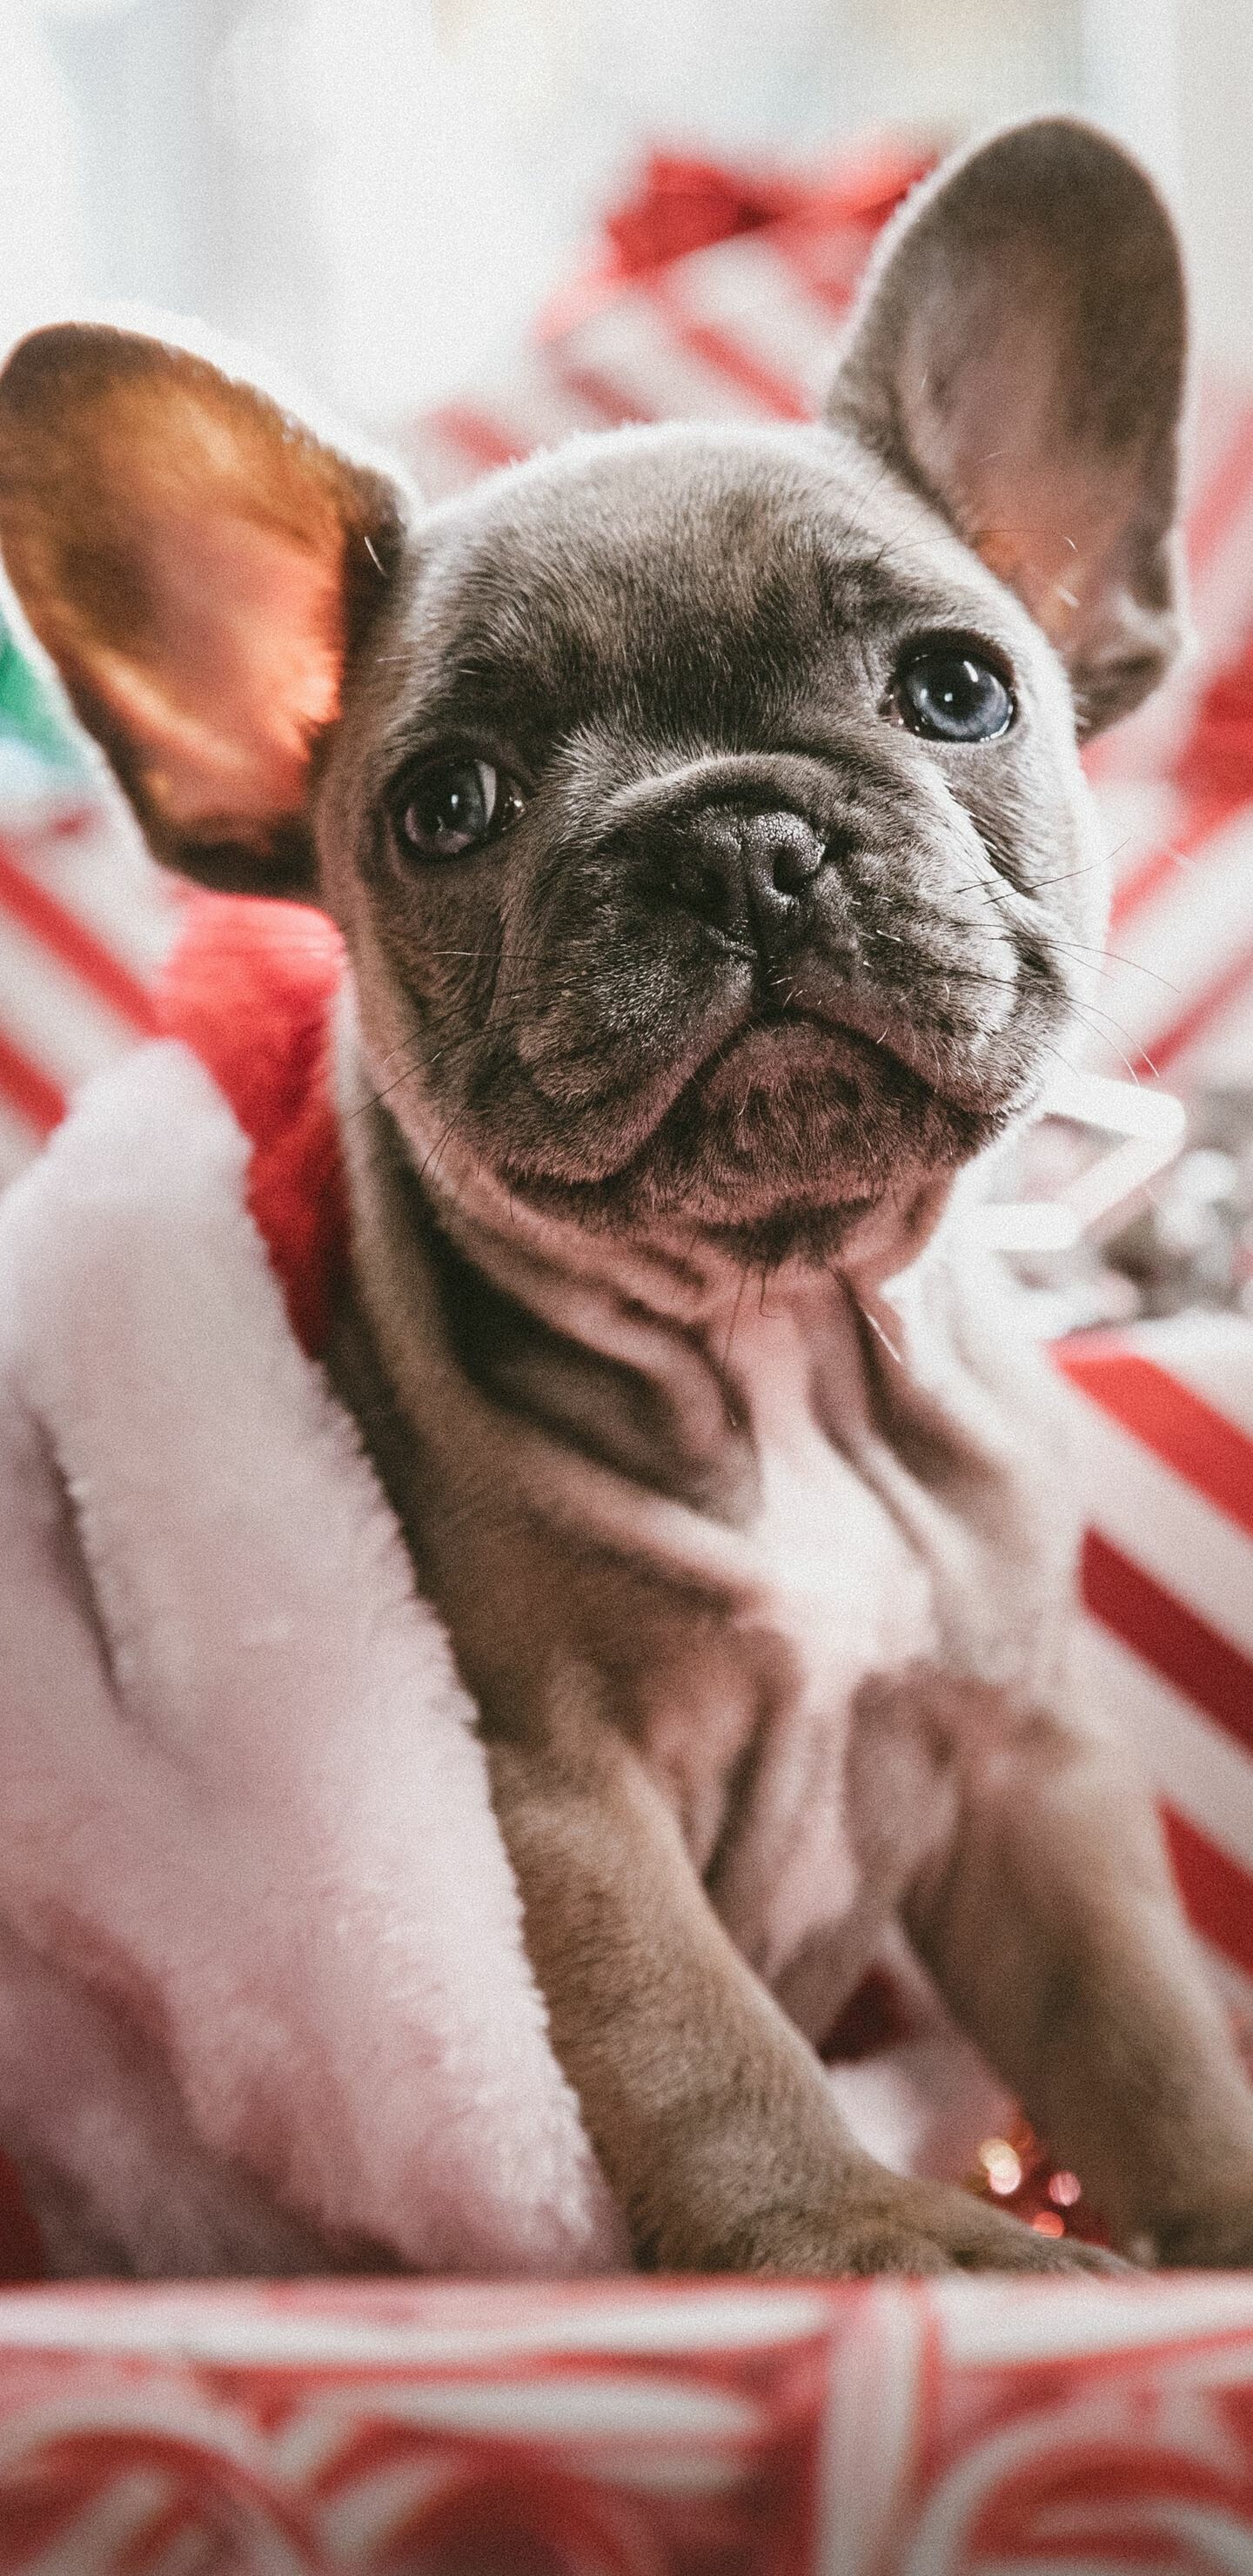 French Bulldog: Christmas puppy, A brachycephalic breed, Companion dog. 1440x2960 HD Wallpaper.